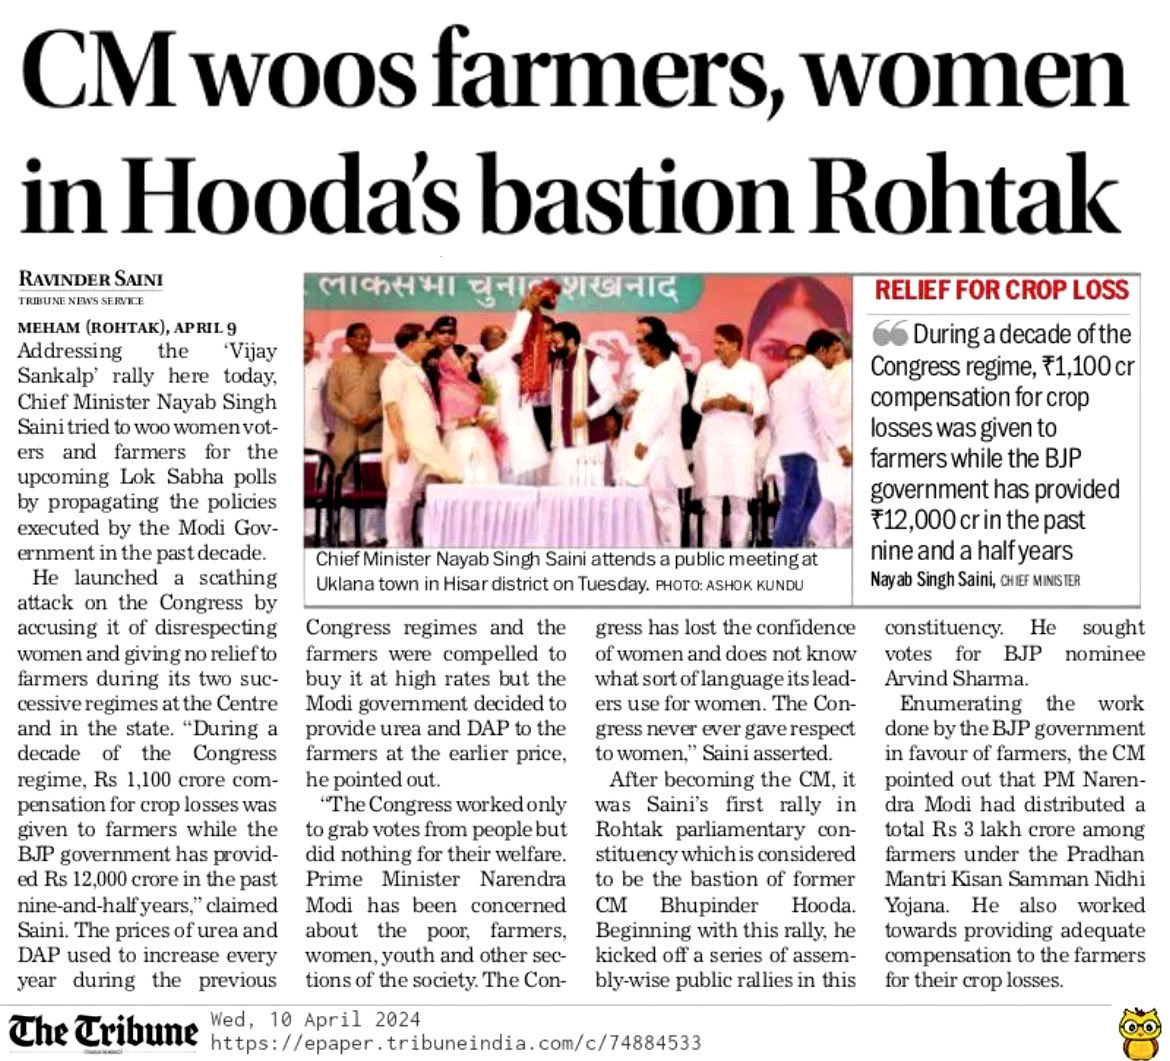 CM woos farmers, women in Hooda’s bastion Rohtak 
#2024LokSabhaPolls #VijaySankalpRally #Meham #Rohtak #BJP #TheTribune #Haryana